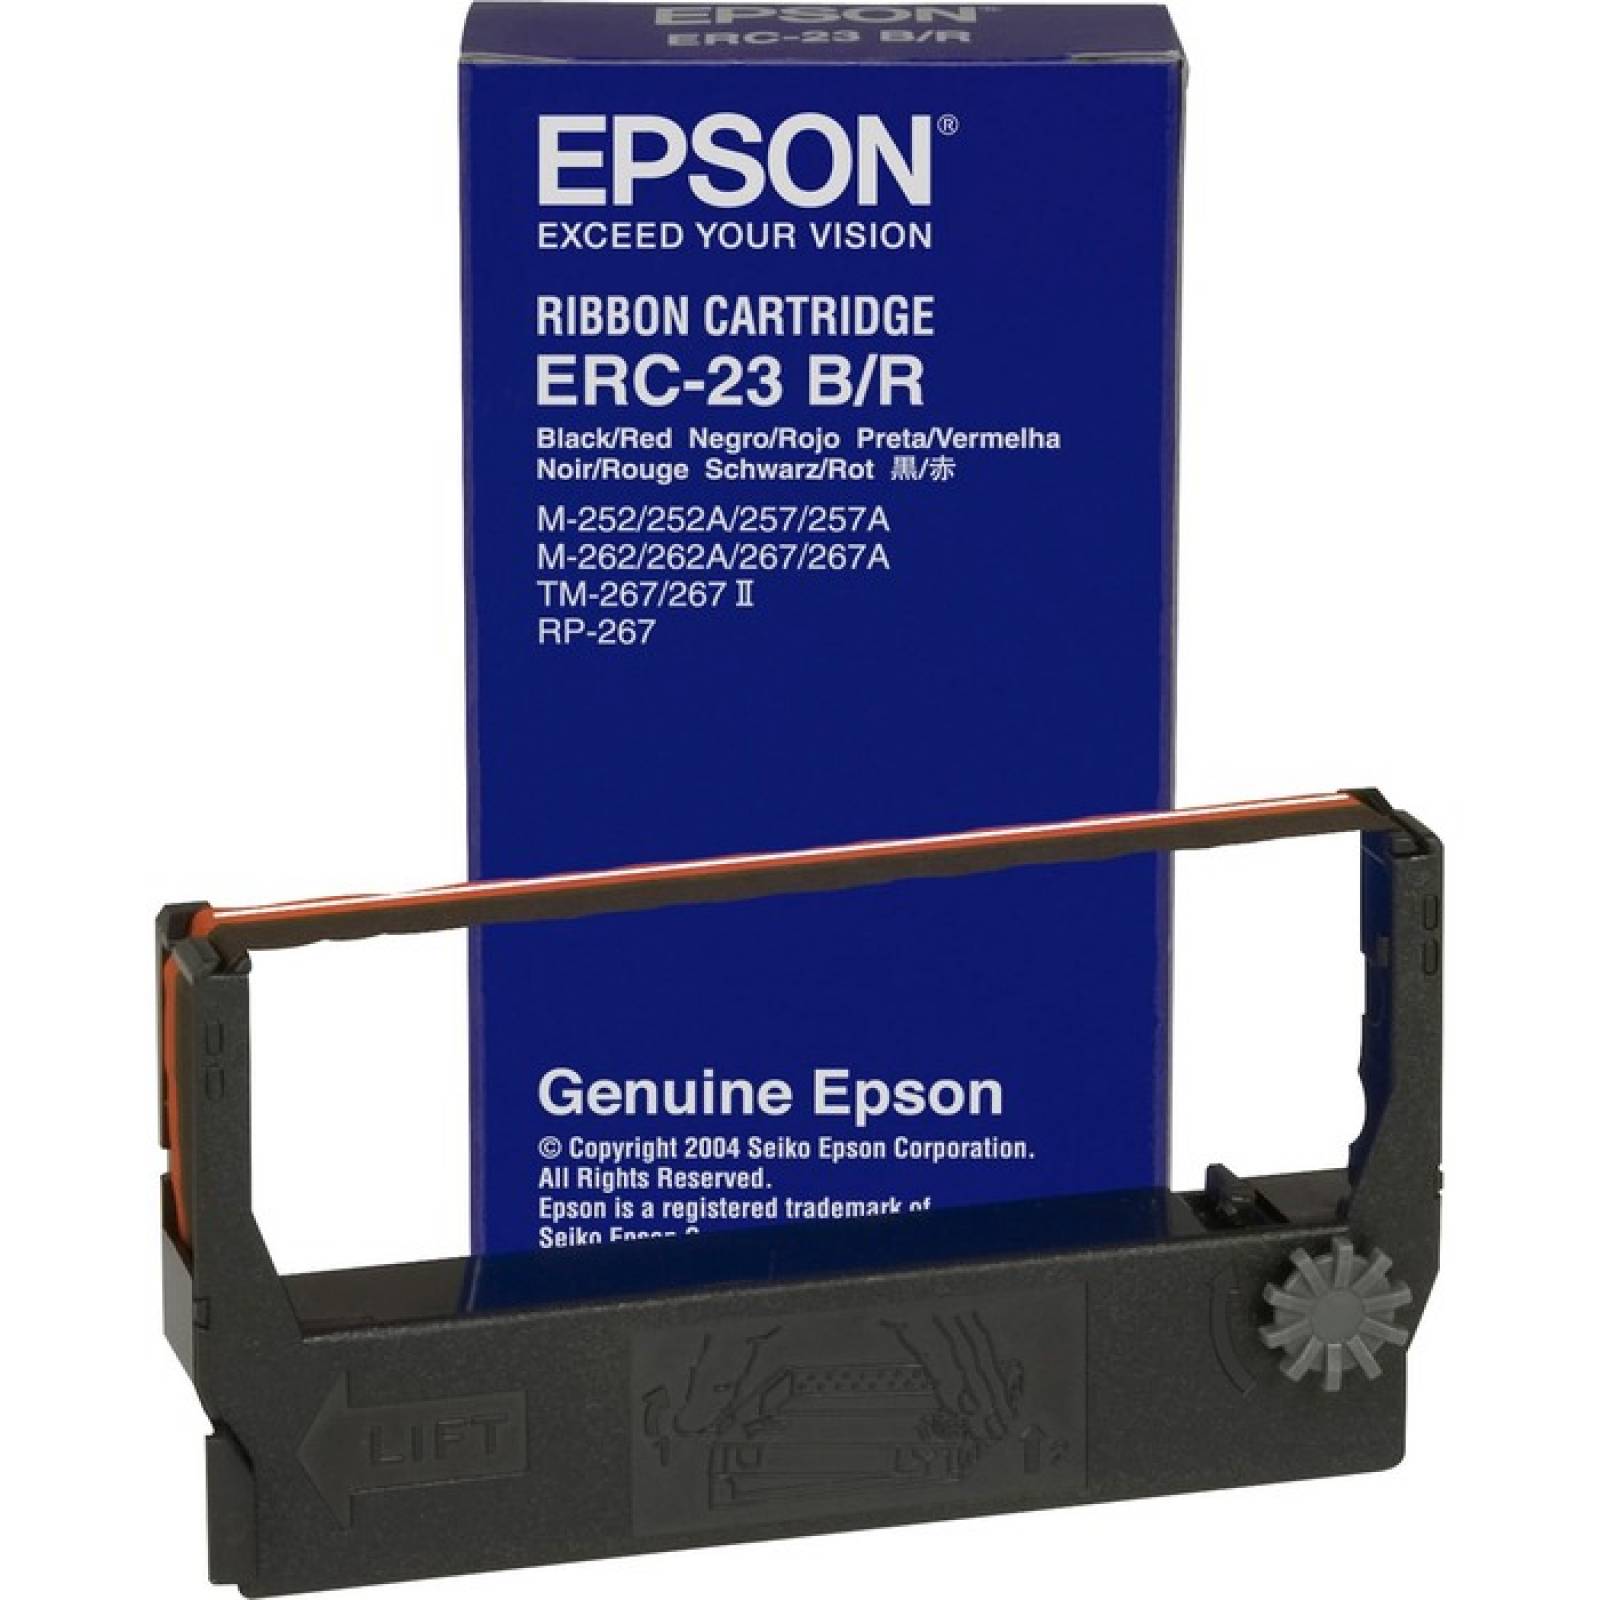 epson lx 300 ii ribbon cartridge price